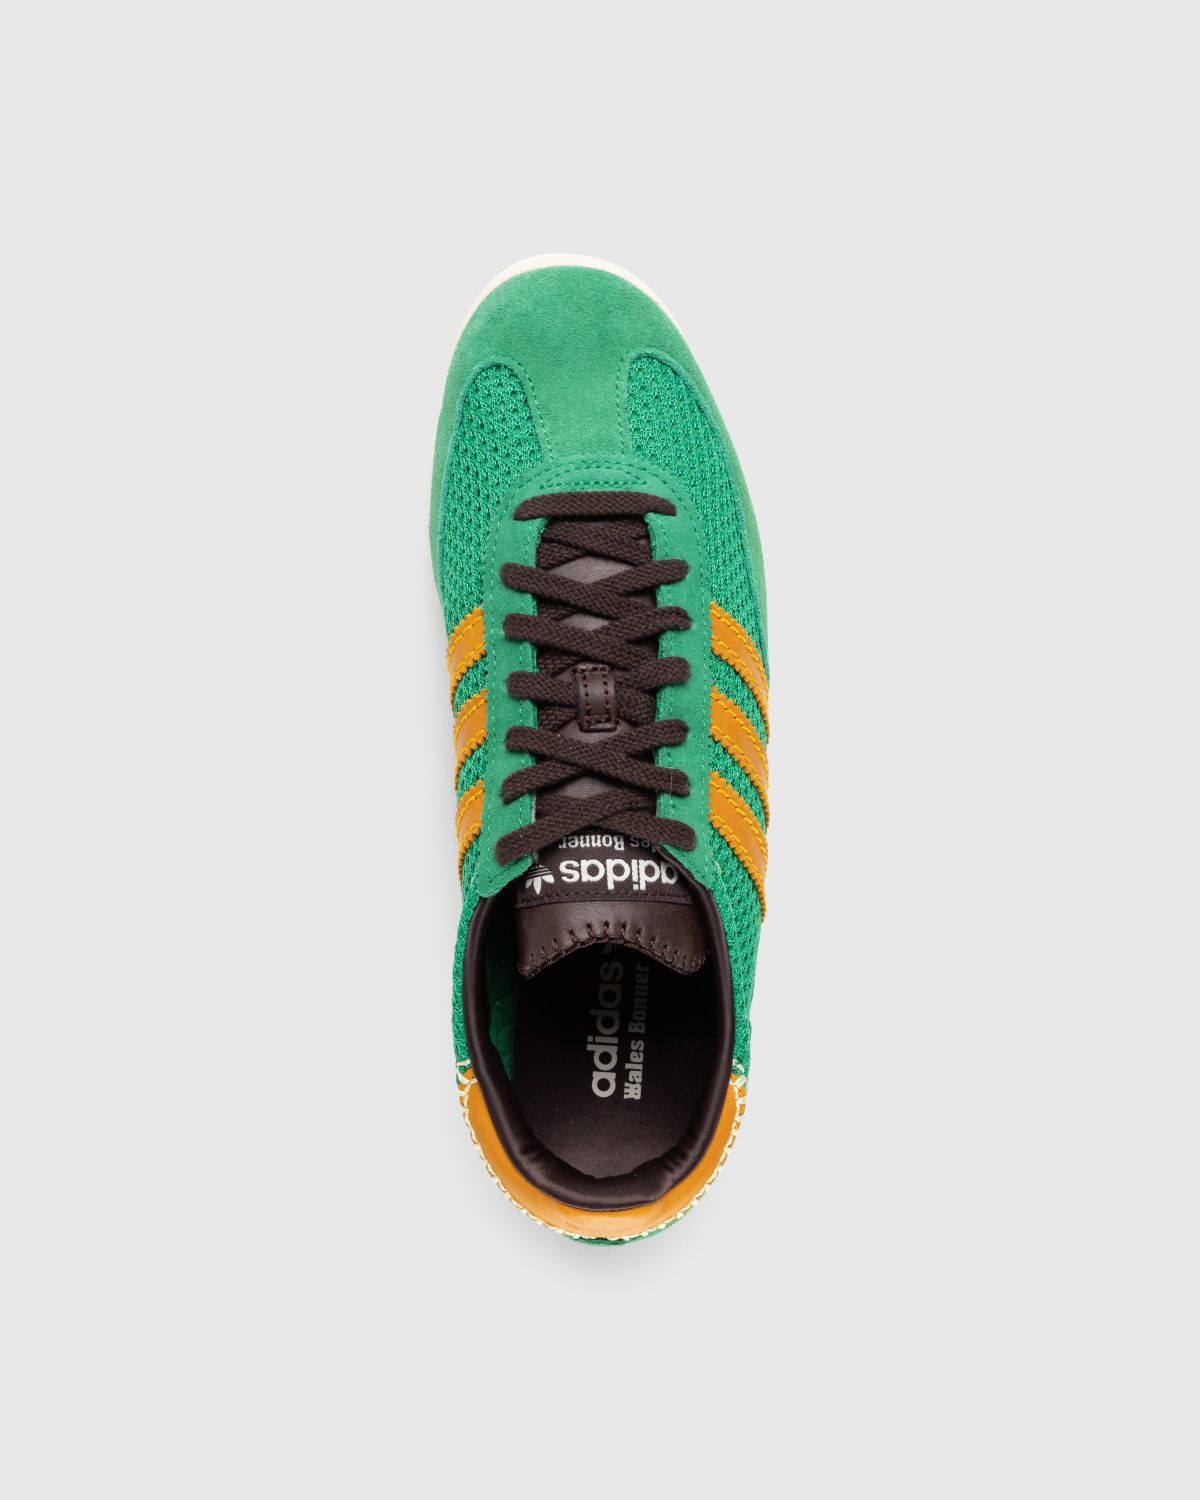 Adidas x Wales Bonner – SL72 Knit Team Green - Sneakers - Green - Image 5